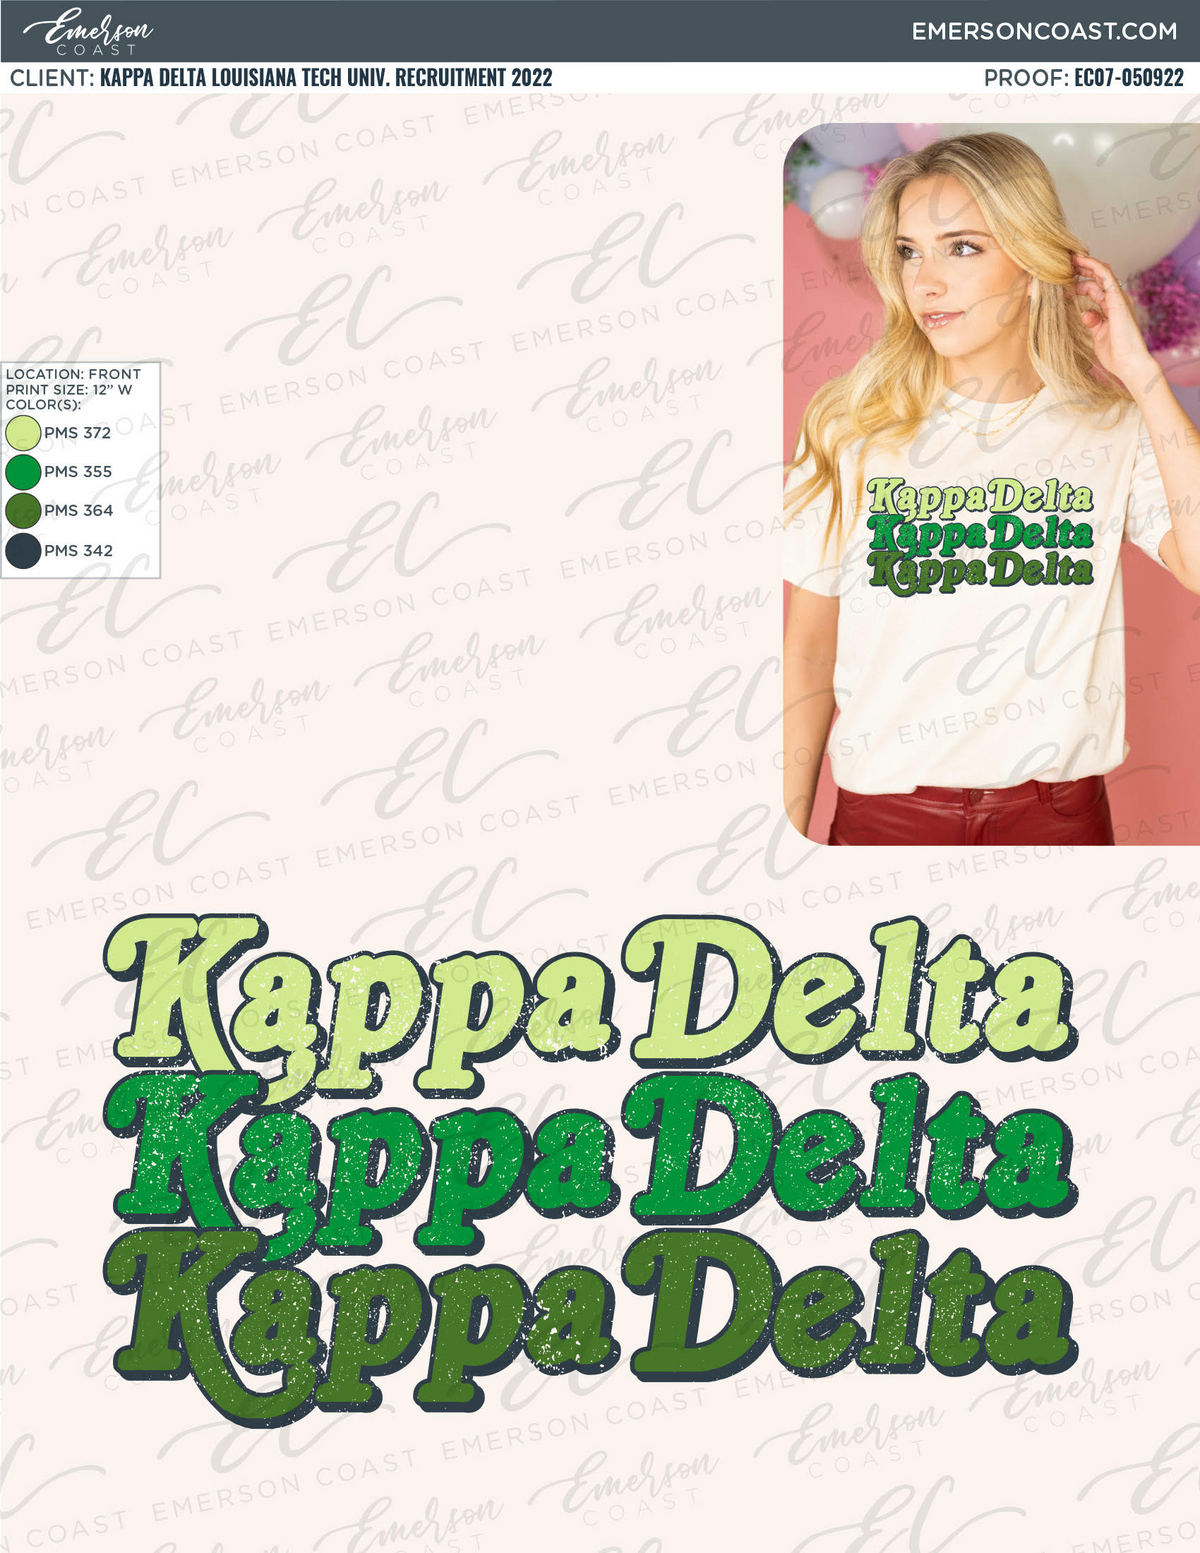 Kappa Delta Shades of Green Recruitment Tee